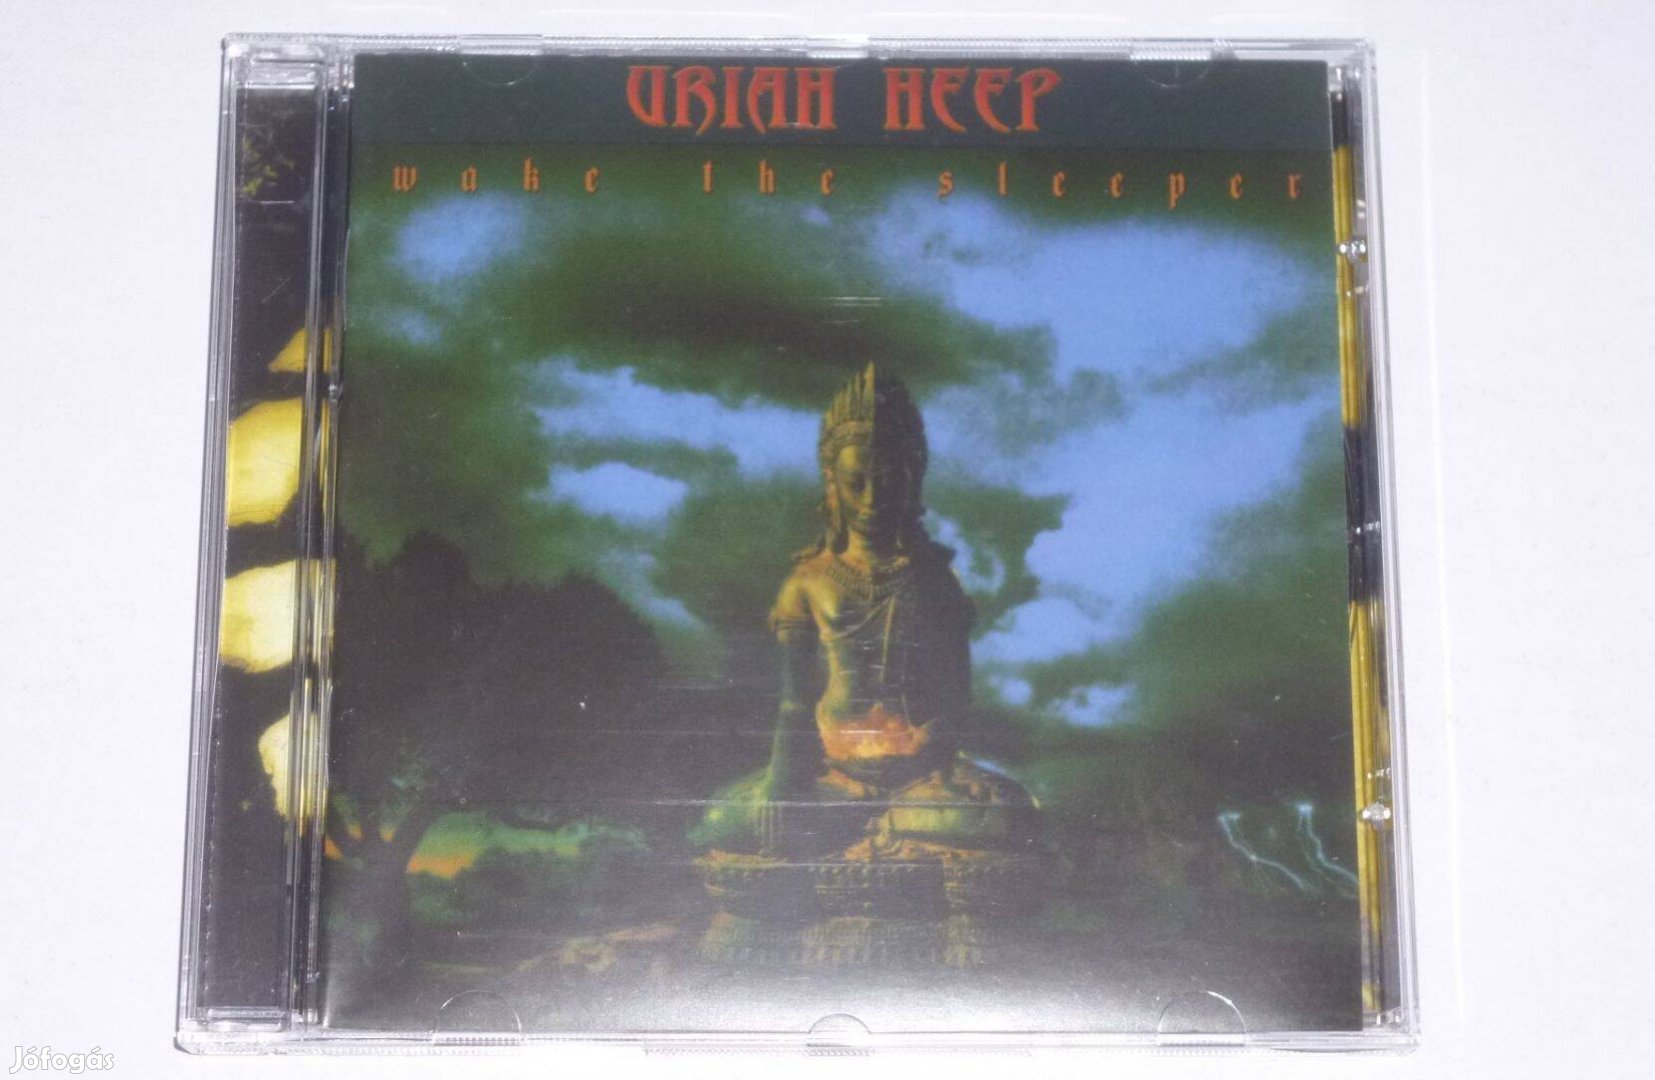 Uriah Heep - Wake The Sleeper CD